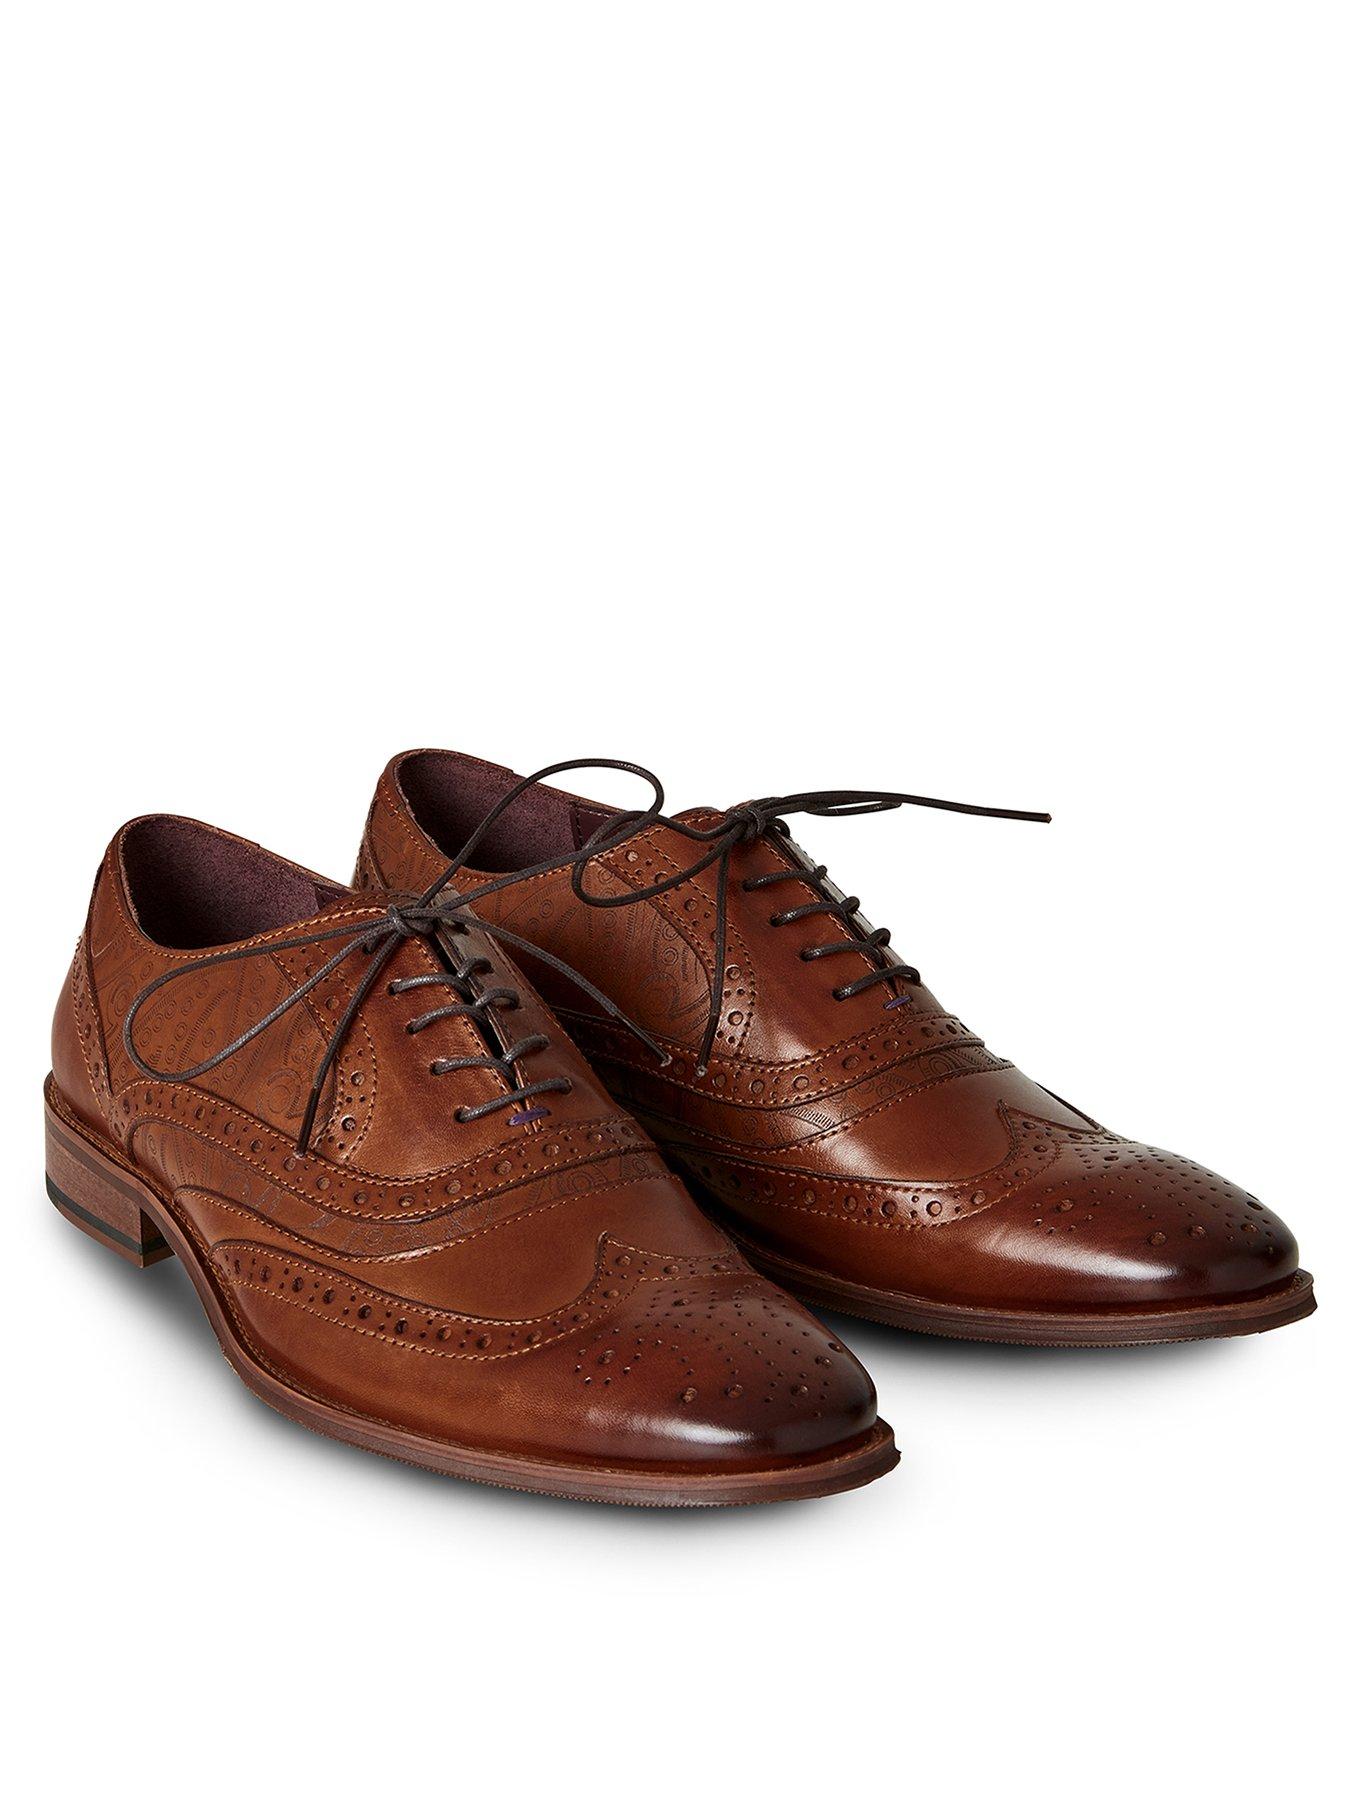 joe browns men's shoes